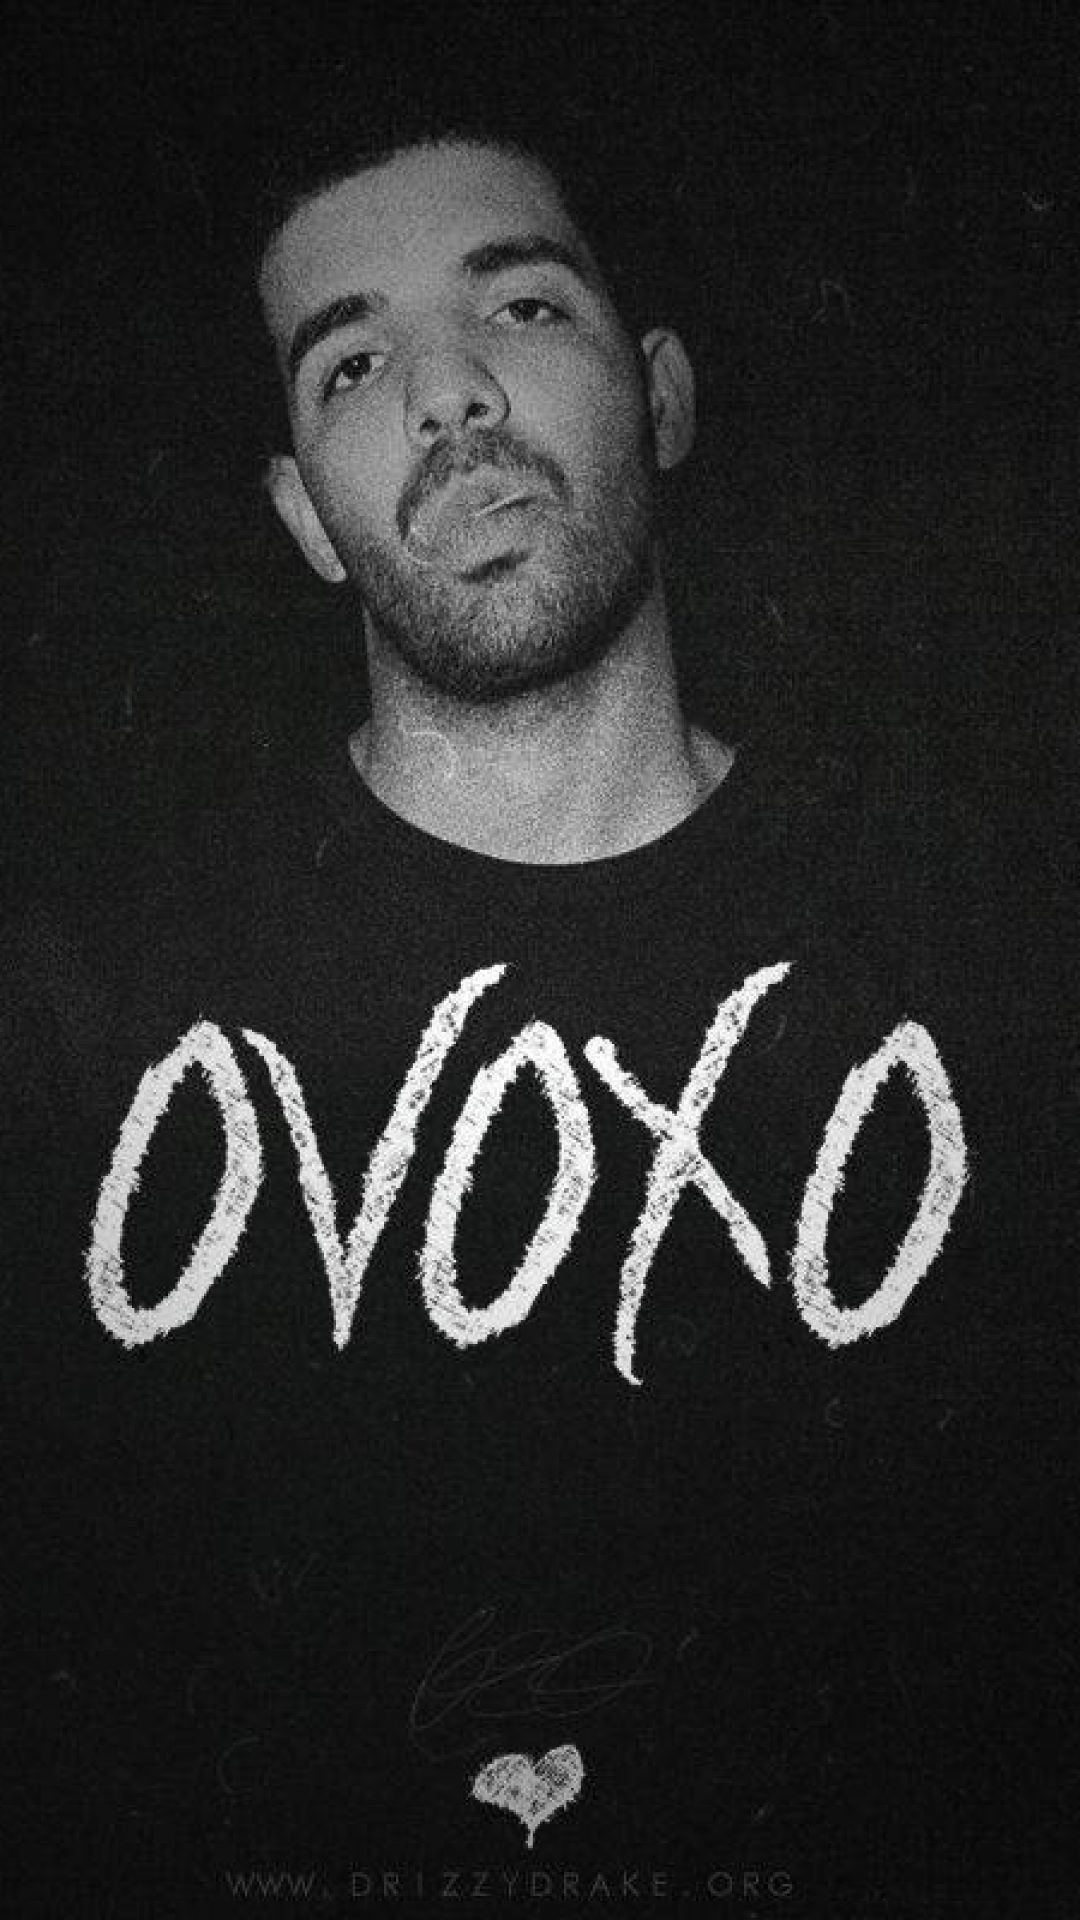 Drake iPhone Wallpaper (80+ images)